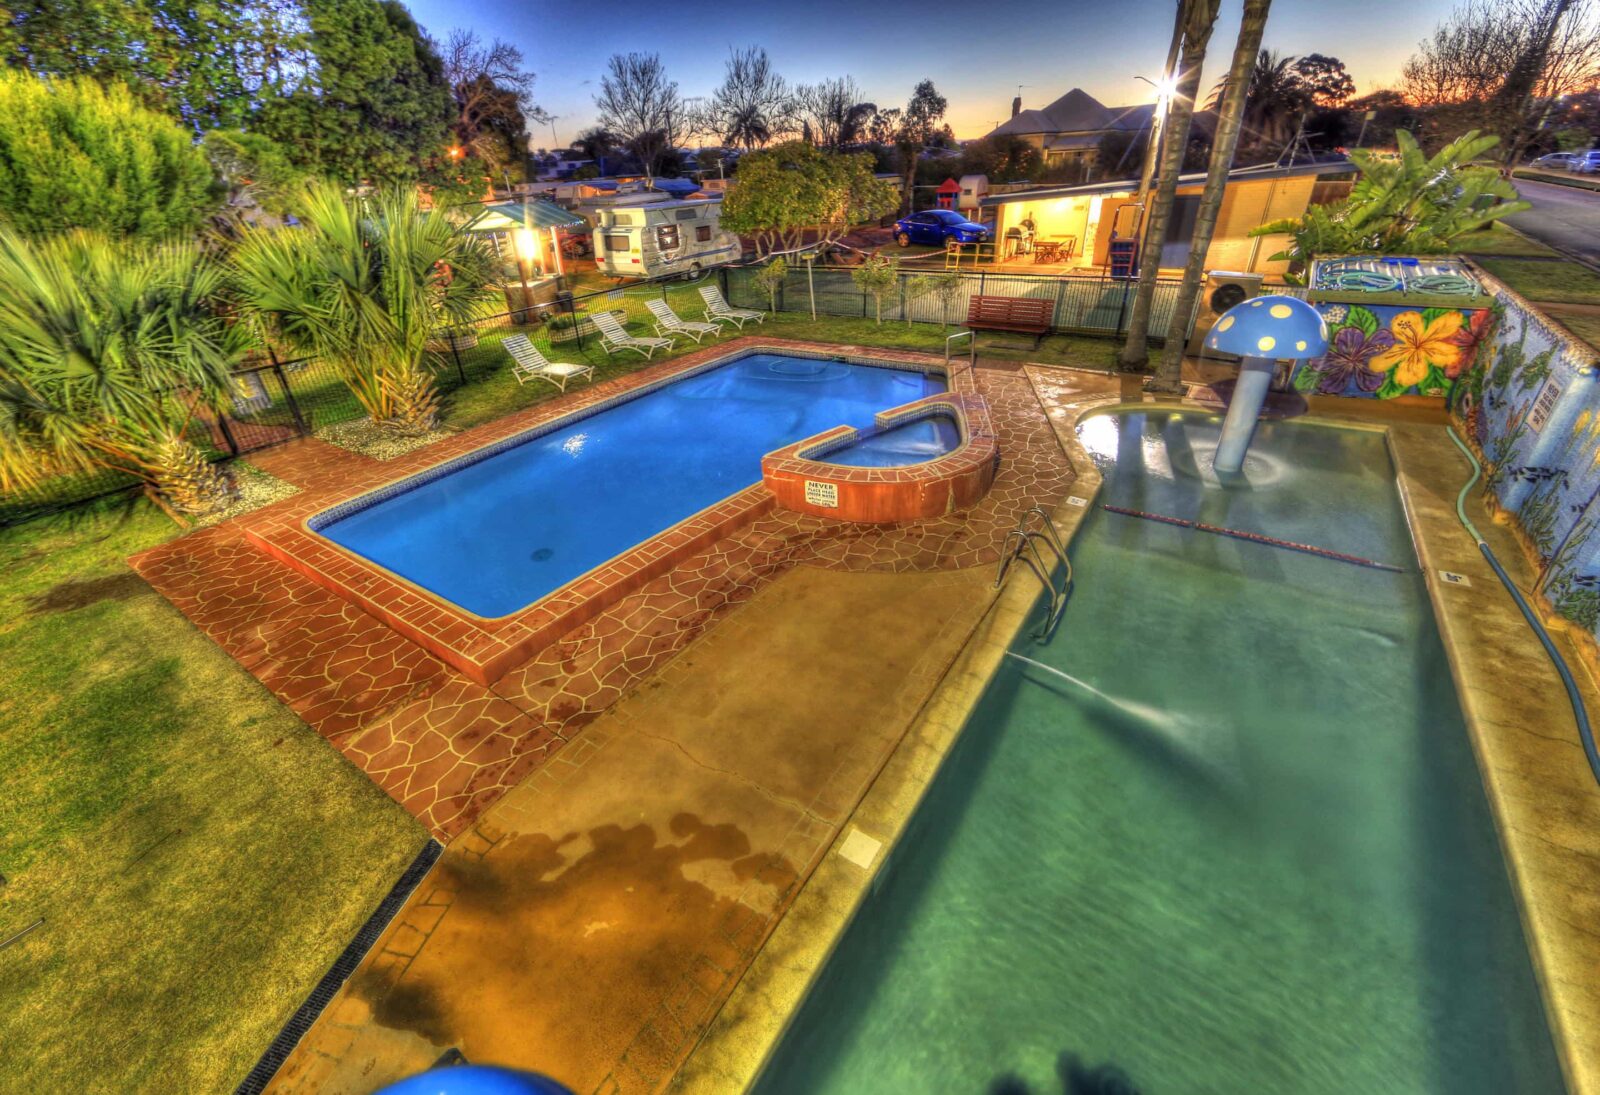 BIG4 Toowoomba Swimming Pool and Water Play Area